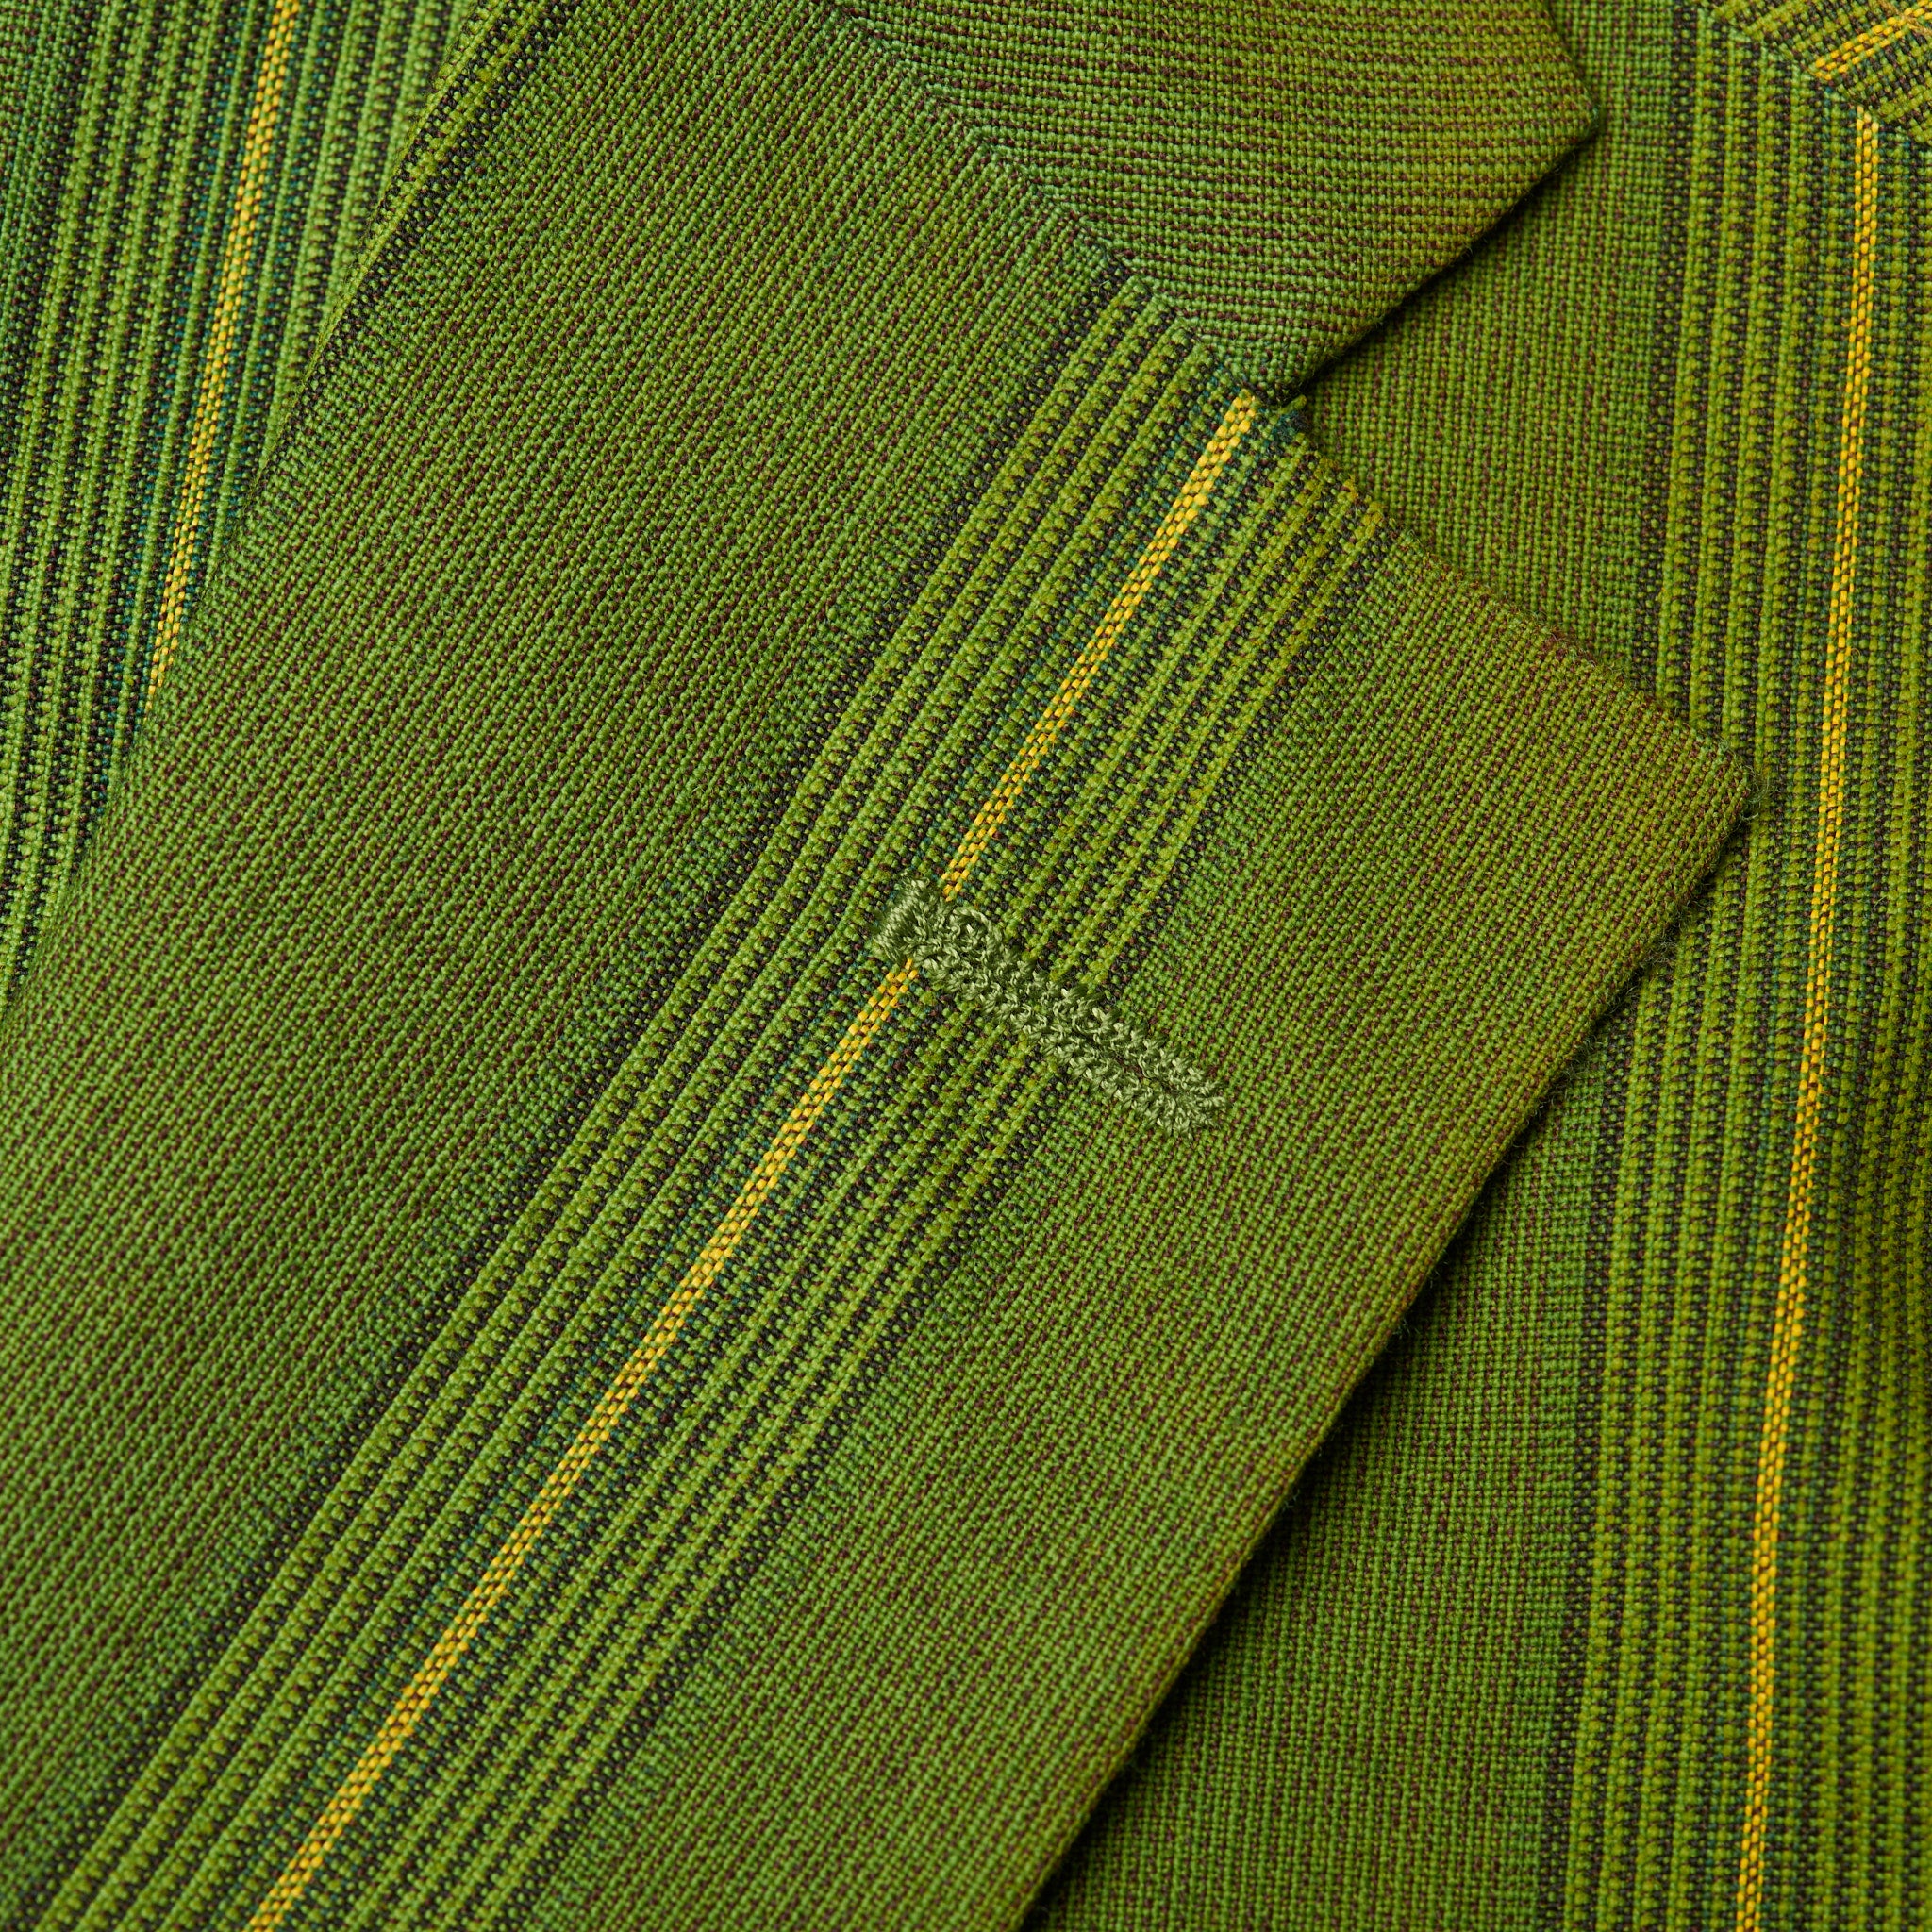 BOGLIOLI Galleria Lime Green Striped Wool-Silk-Linen Unconstructed Jacket 50 NEW BOGLIOLI